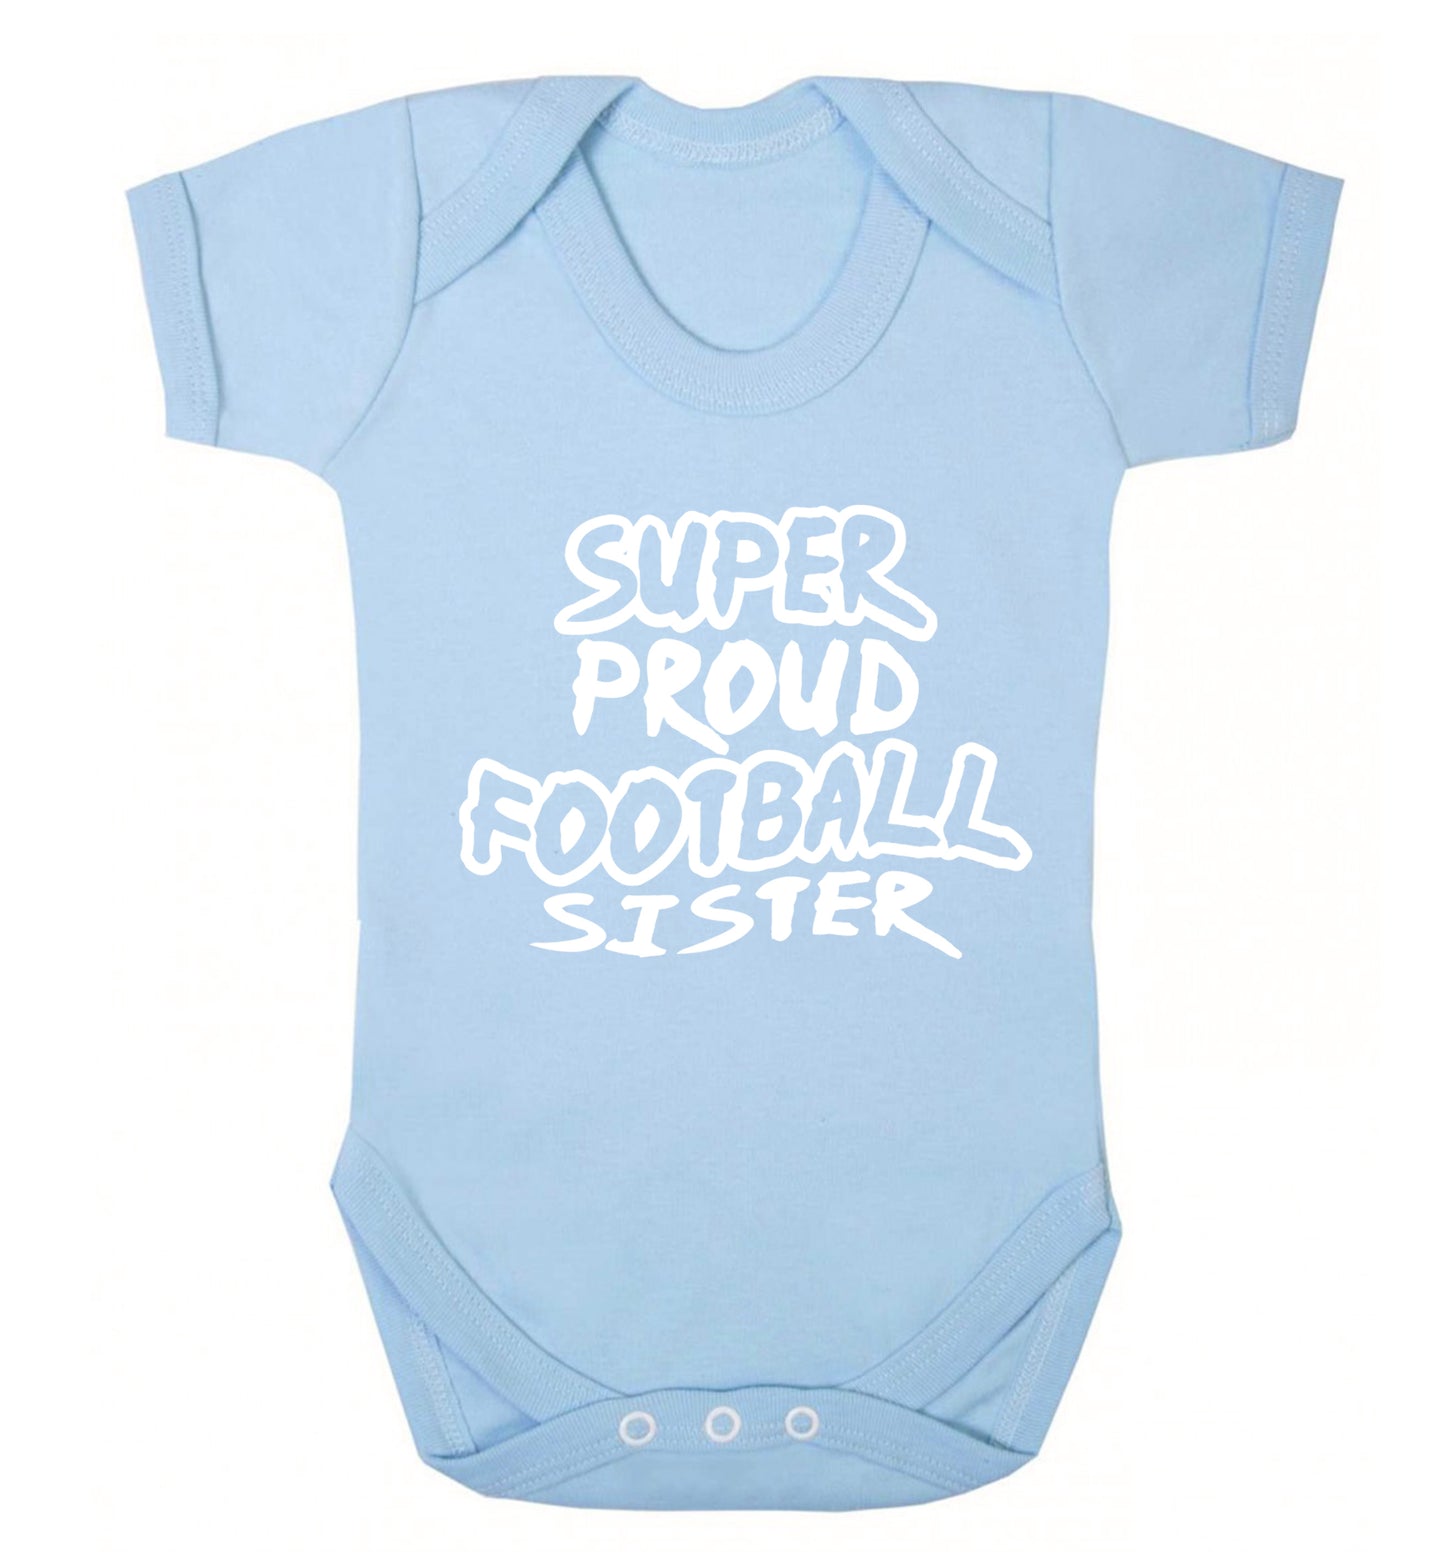 Super proud football sister Baby Vest pale blue 18-24 months